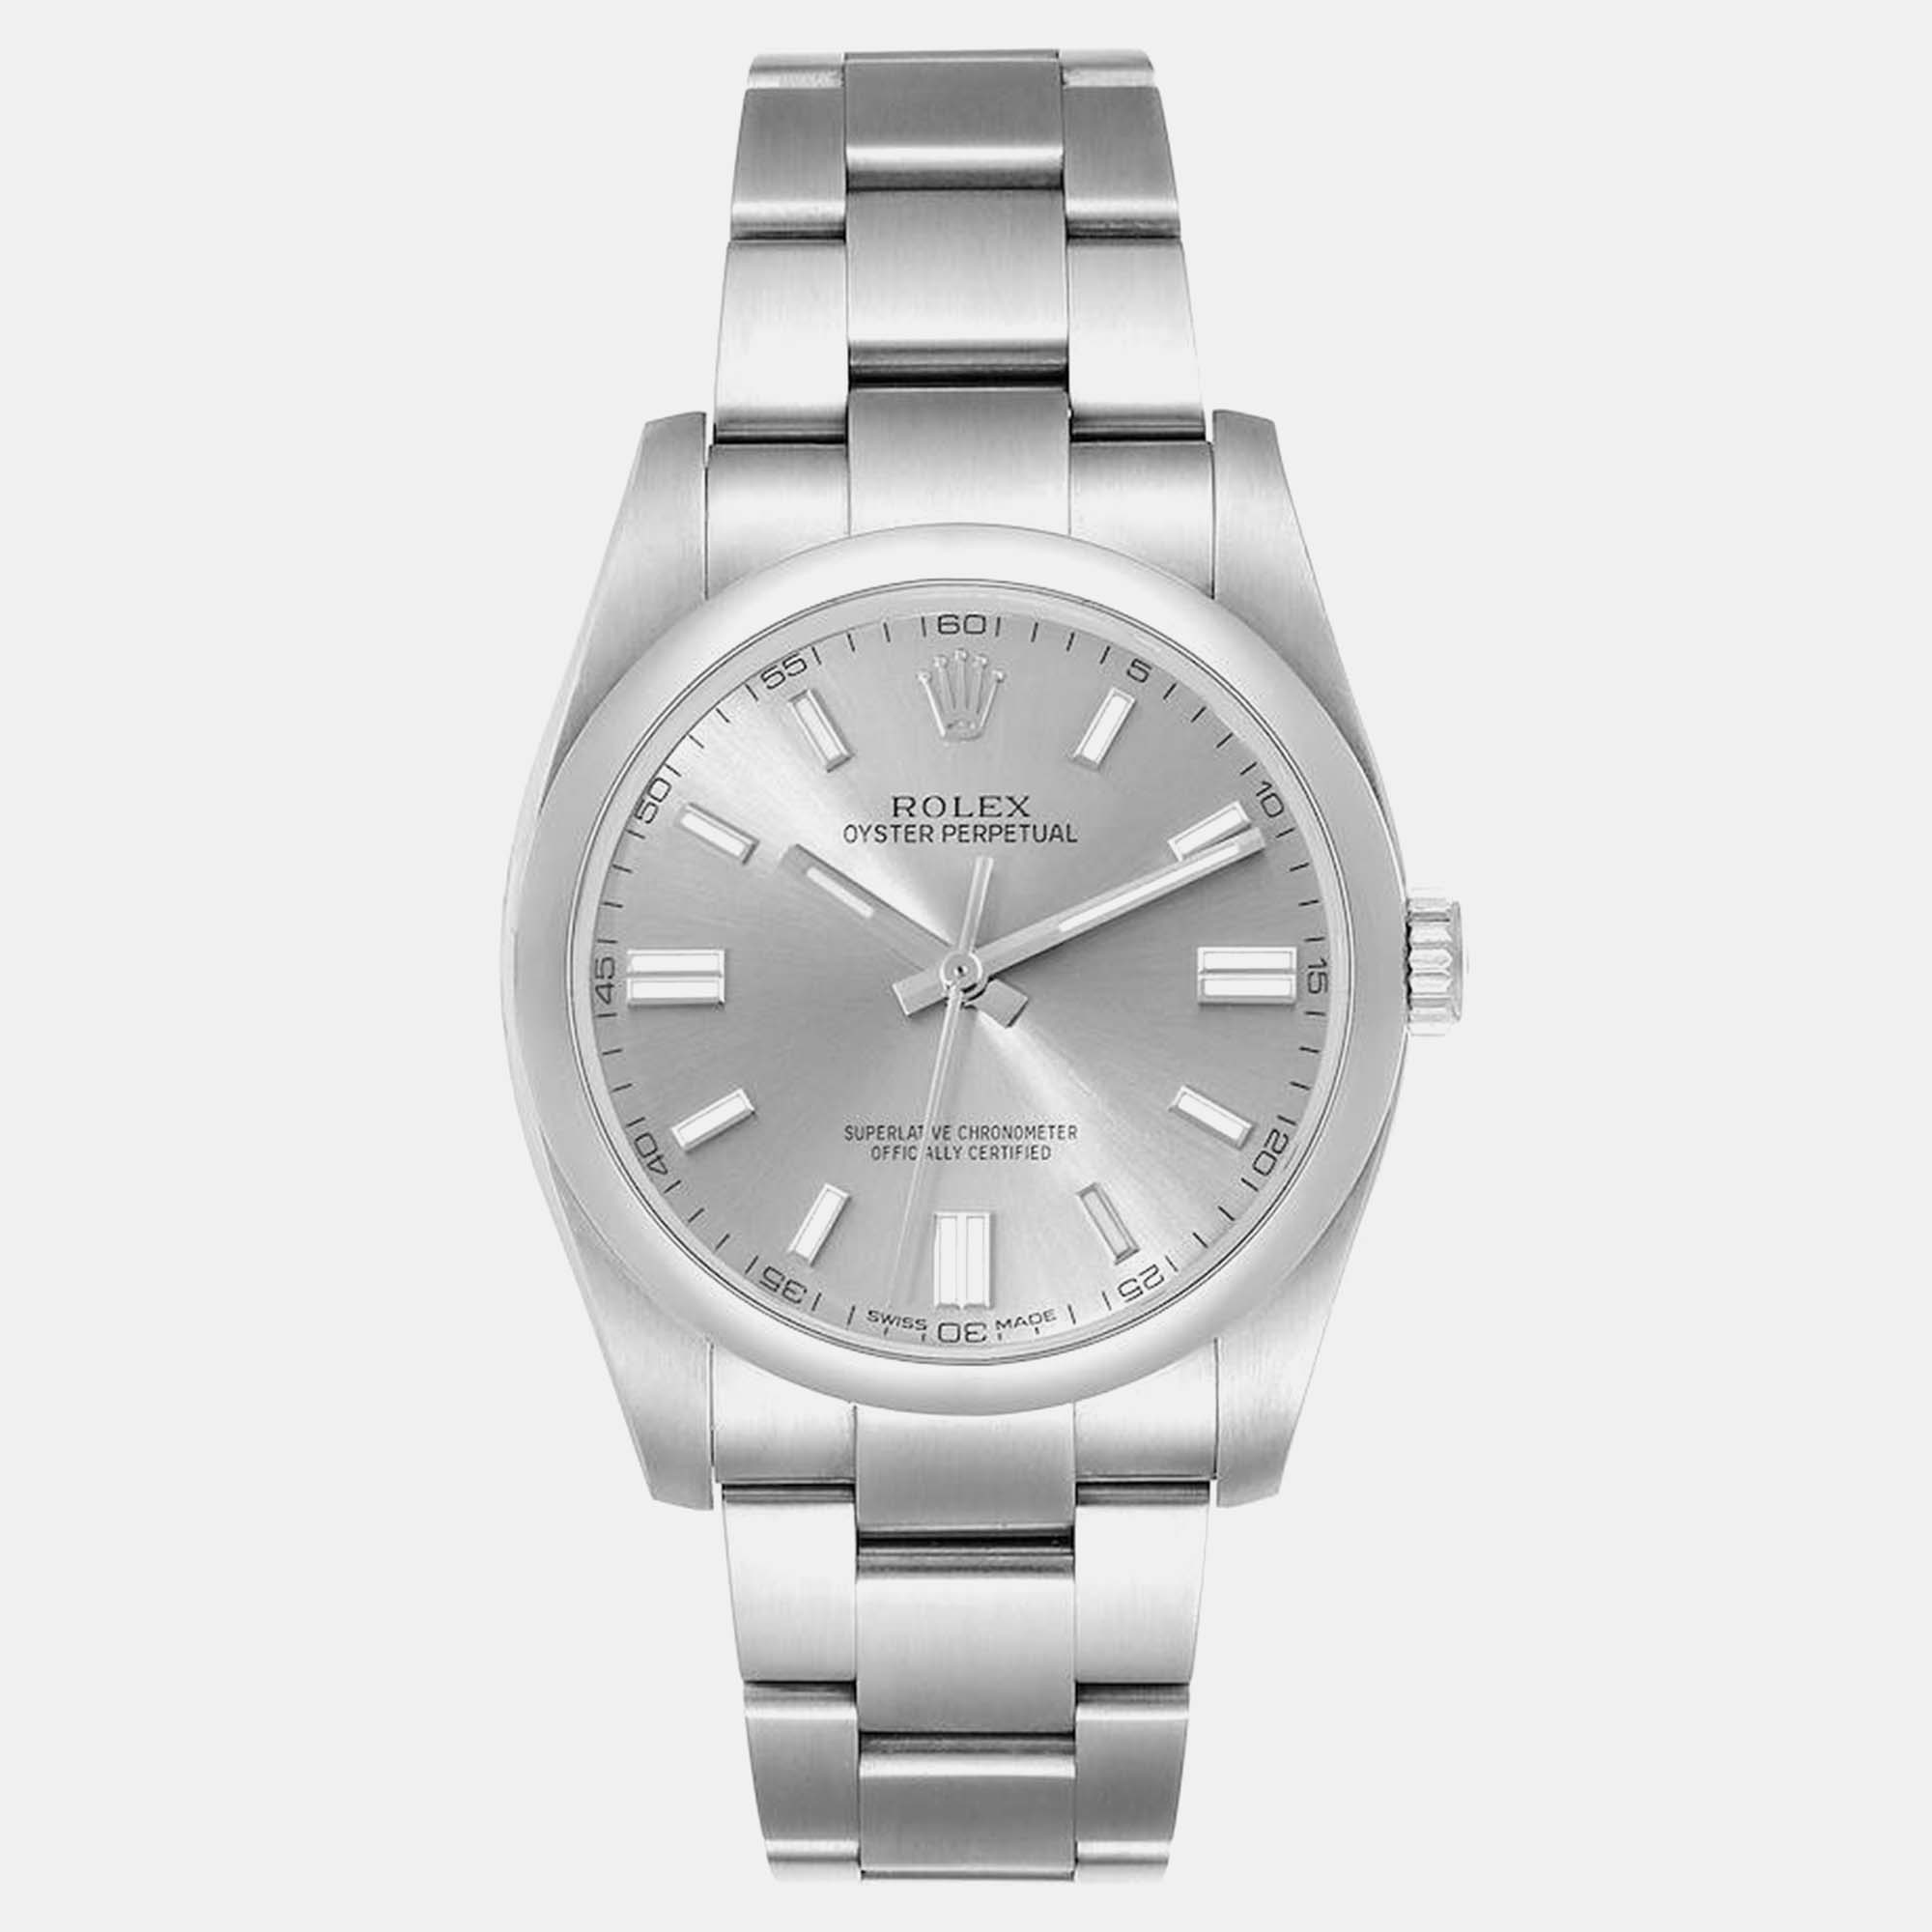 Rolex oyster perpetual grey dial steel men's watch 36 mm